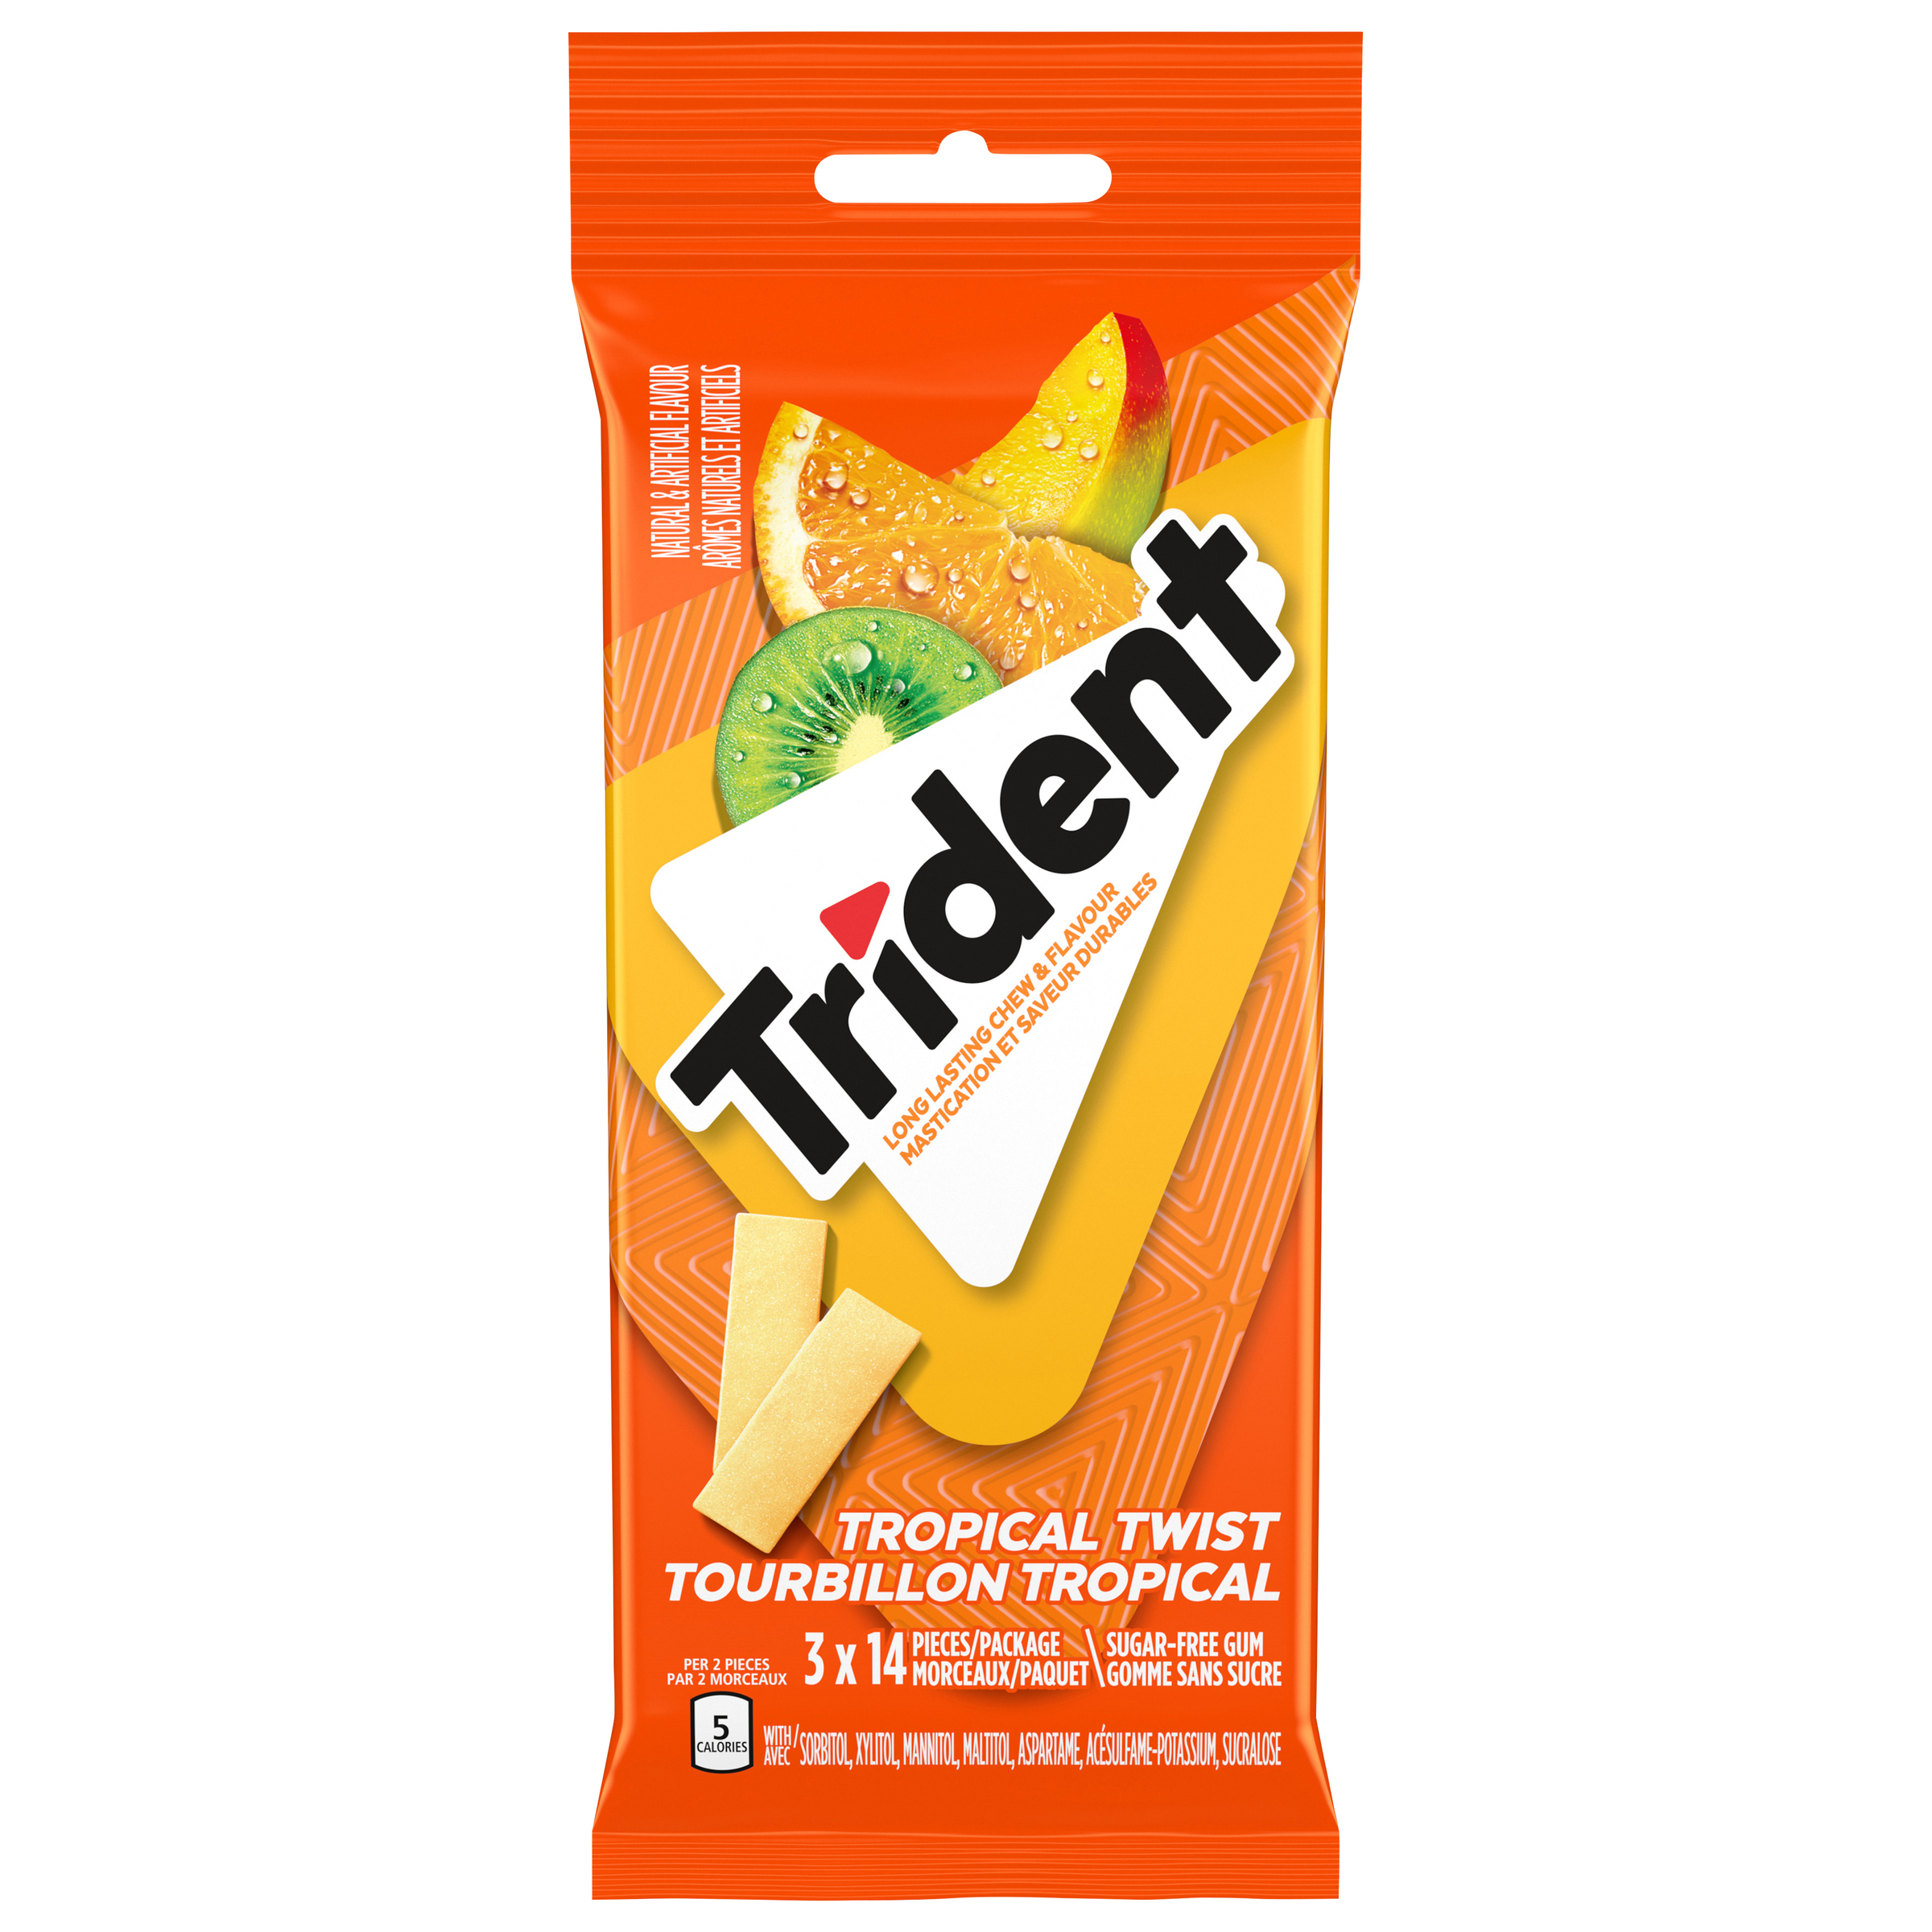 Trident Tropical Twist Gum 42 Count